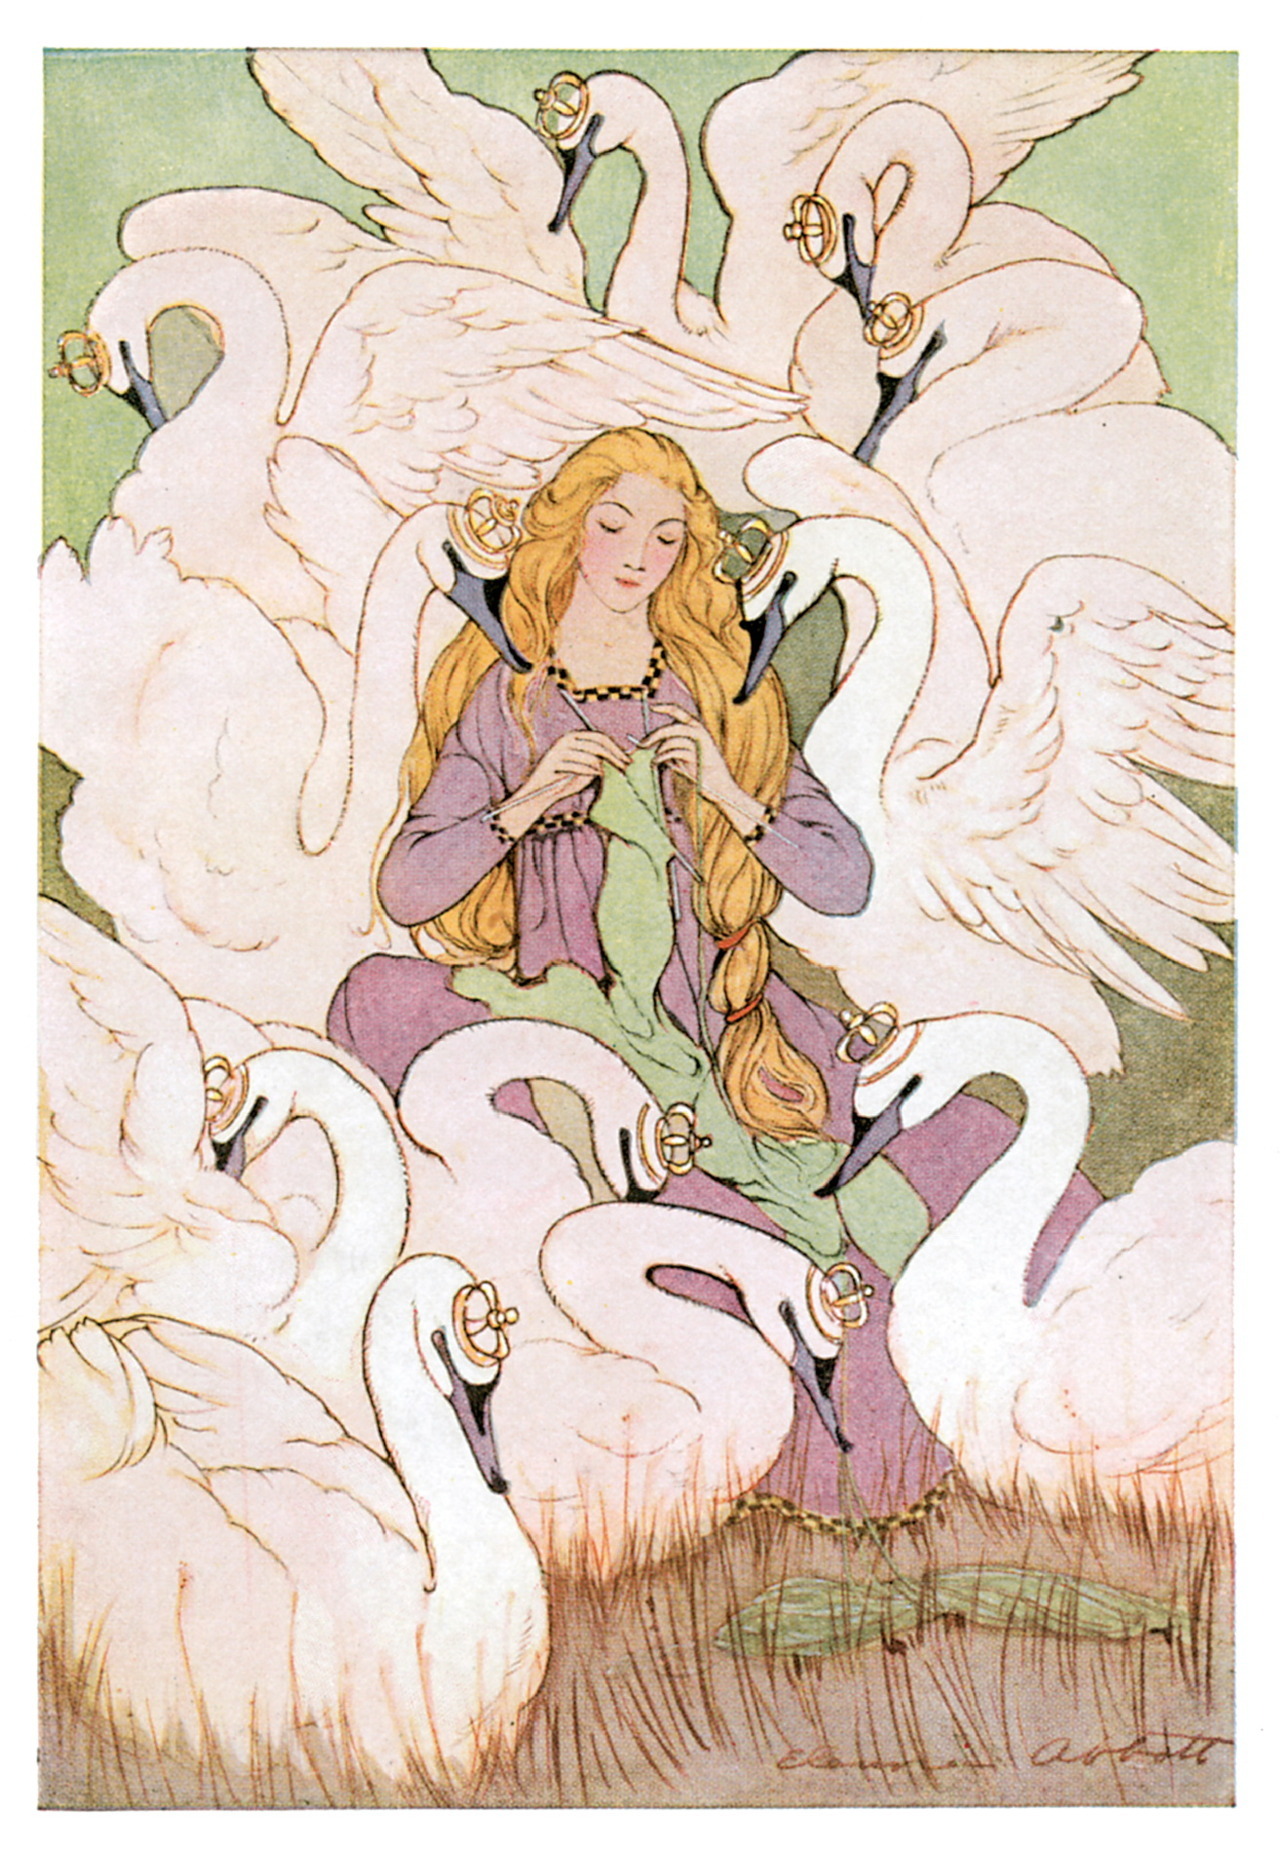 Princess Stories - The Wild Swans - Page 1 - Wattpad1280 x 1851